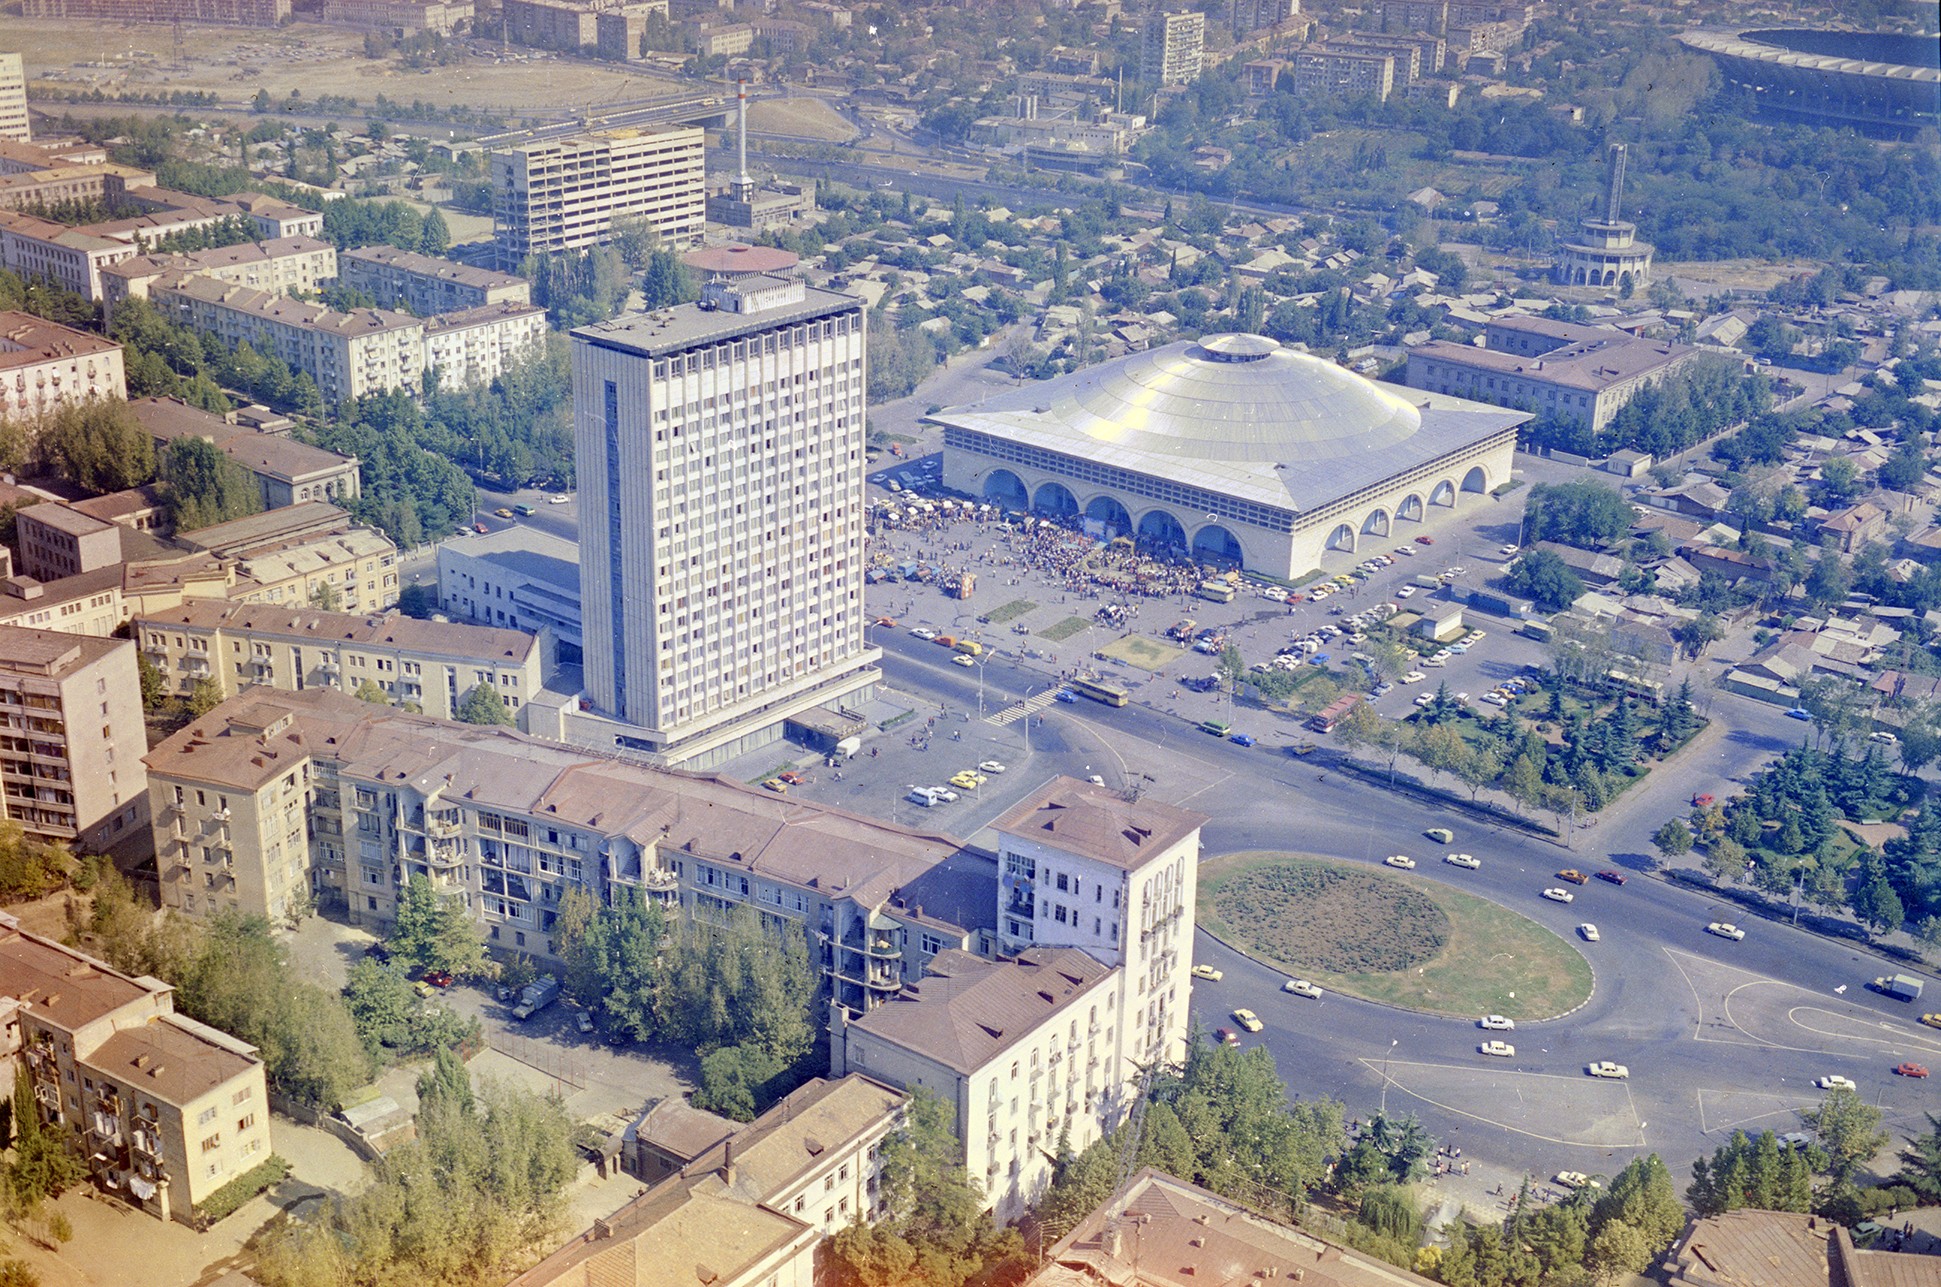 <br> თბილისის ხედი ვერტმფრენიდან, 1979 წელი.
<br> ფოტოს ავტორი სერგო ედიშერაშვილი.
<br> View of Tbilisi from helicopter, 1979.
<br> Photo by Sergo Edisherashvili.